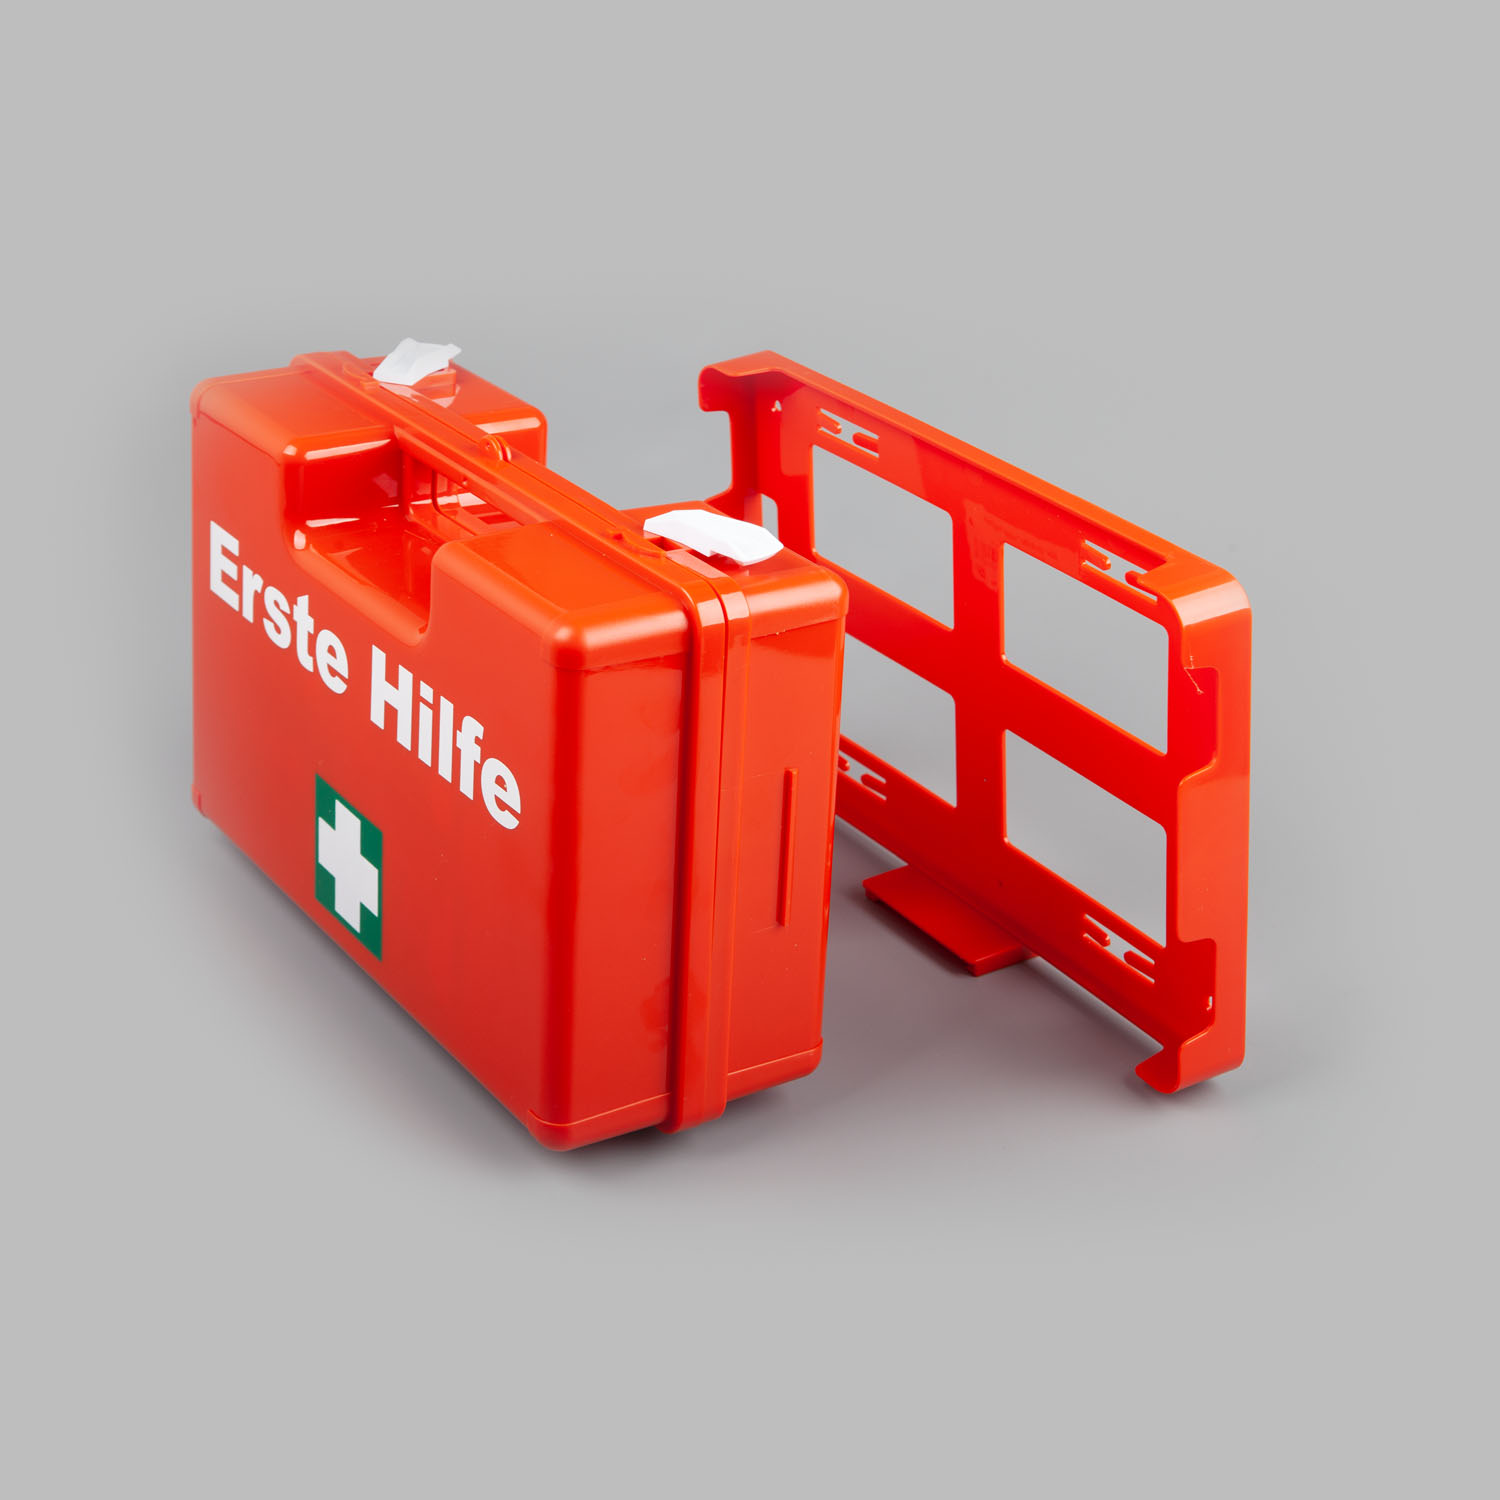 Erste-Hilfe Koffer SAN DIN 13169 neu, 310 x 130 x 210 mm